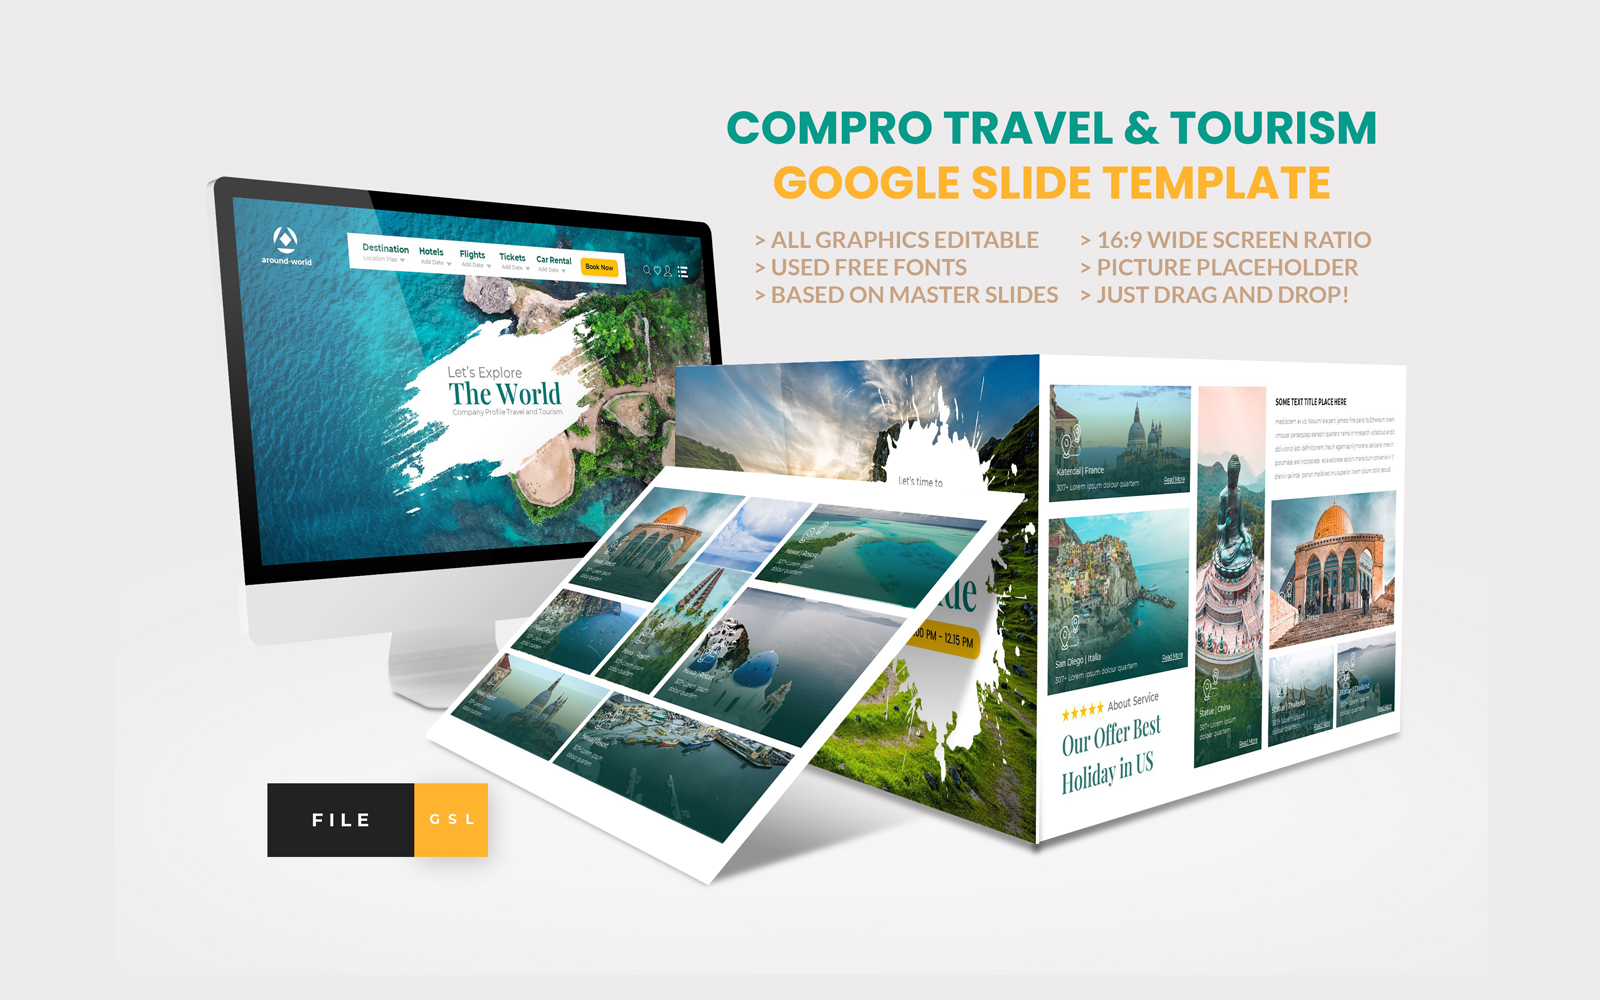 Company Profile Travel and Tourism Google Slide Template